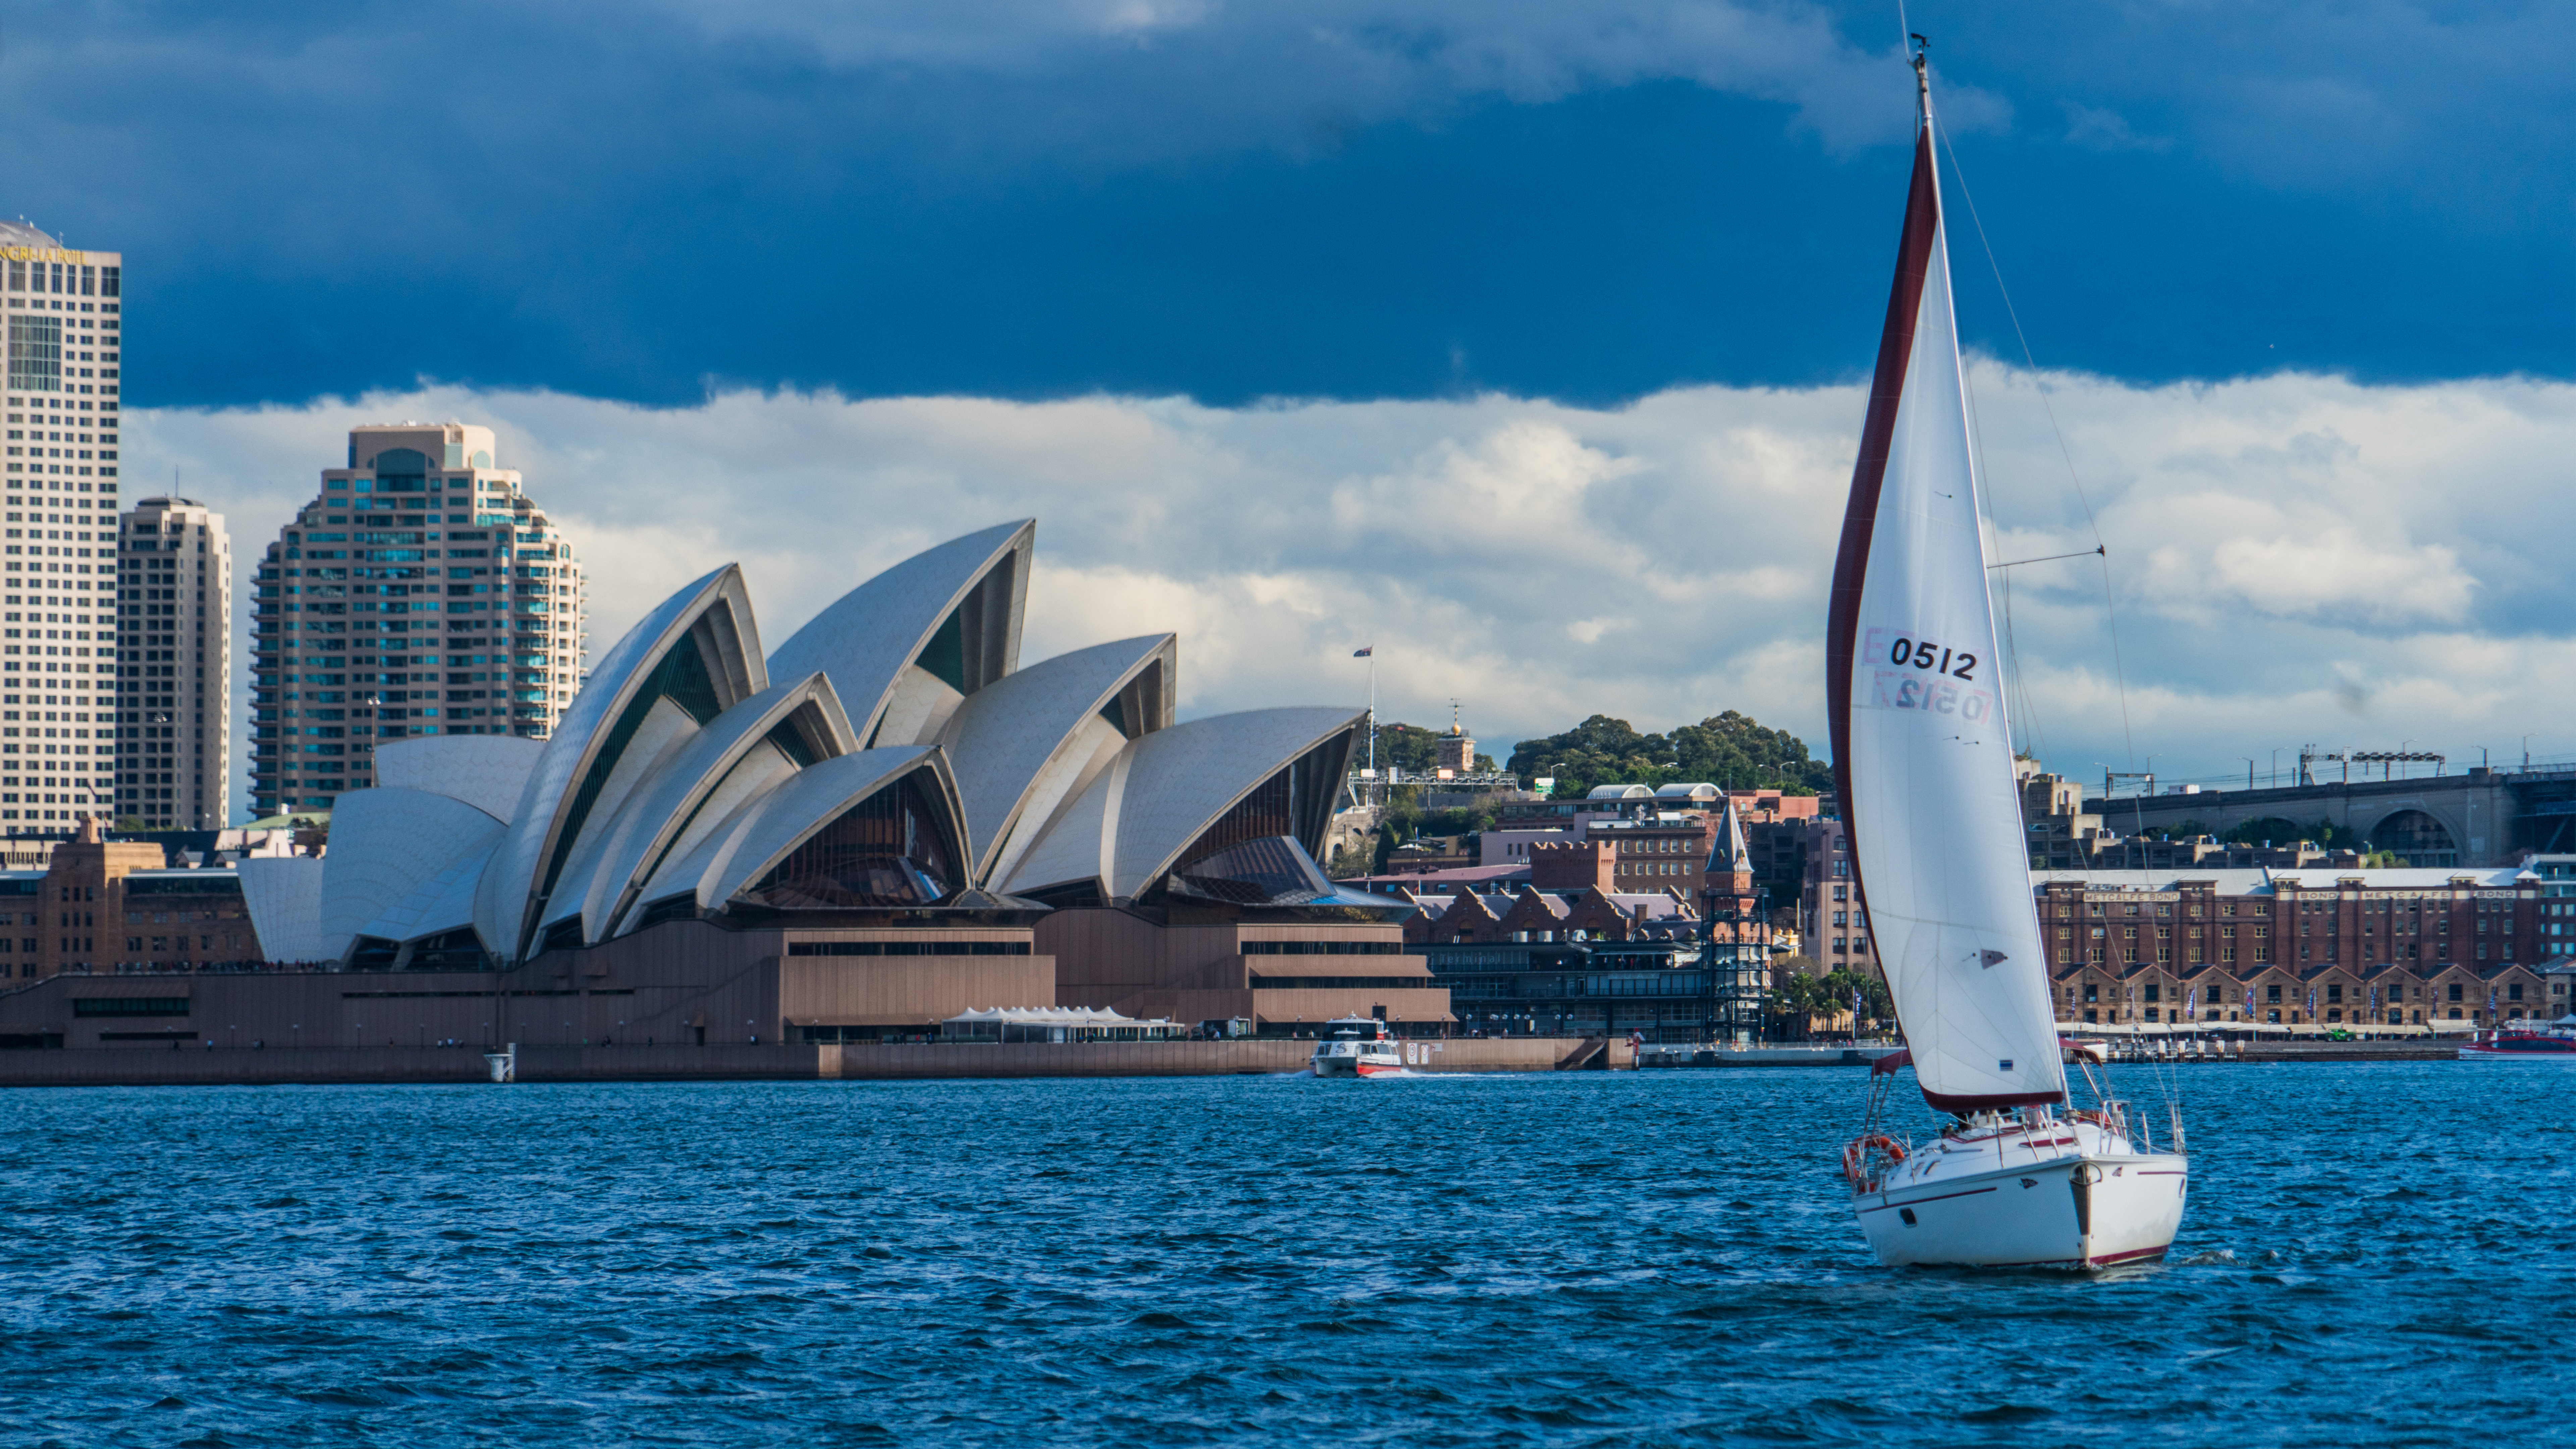 General 7680x4320 Trey Ratcliff photography Australia Sydney Sydney Opera House sailboats harbor sea water landmark Oceania